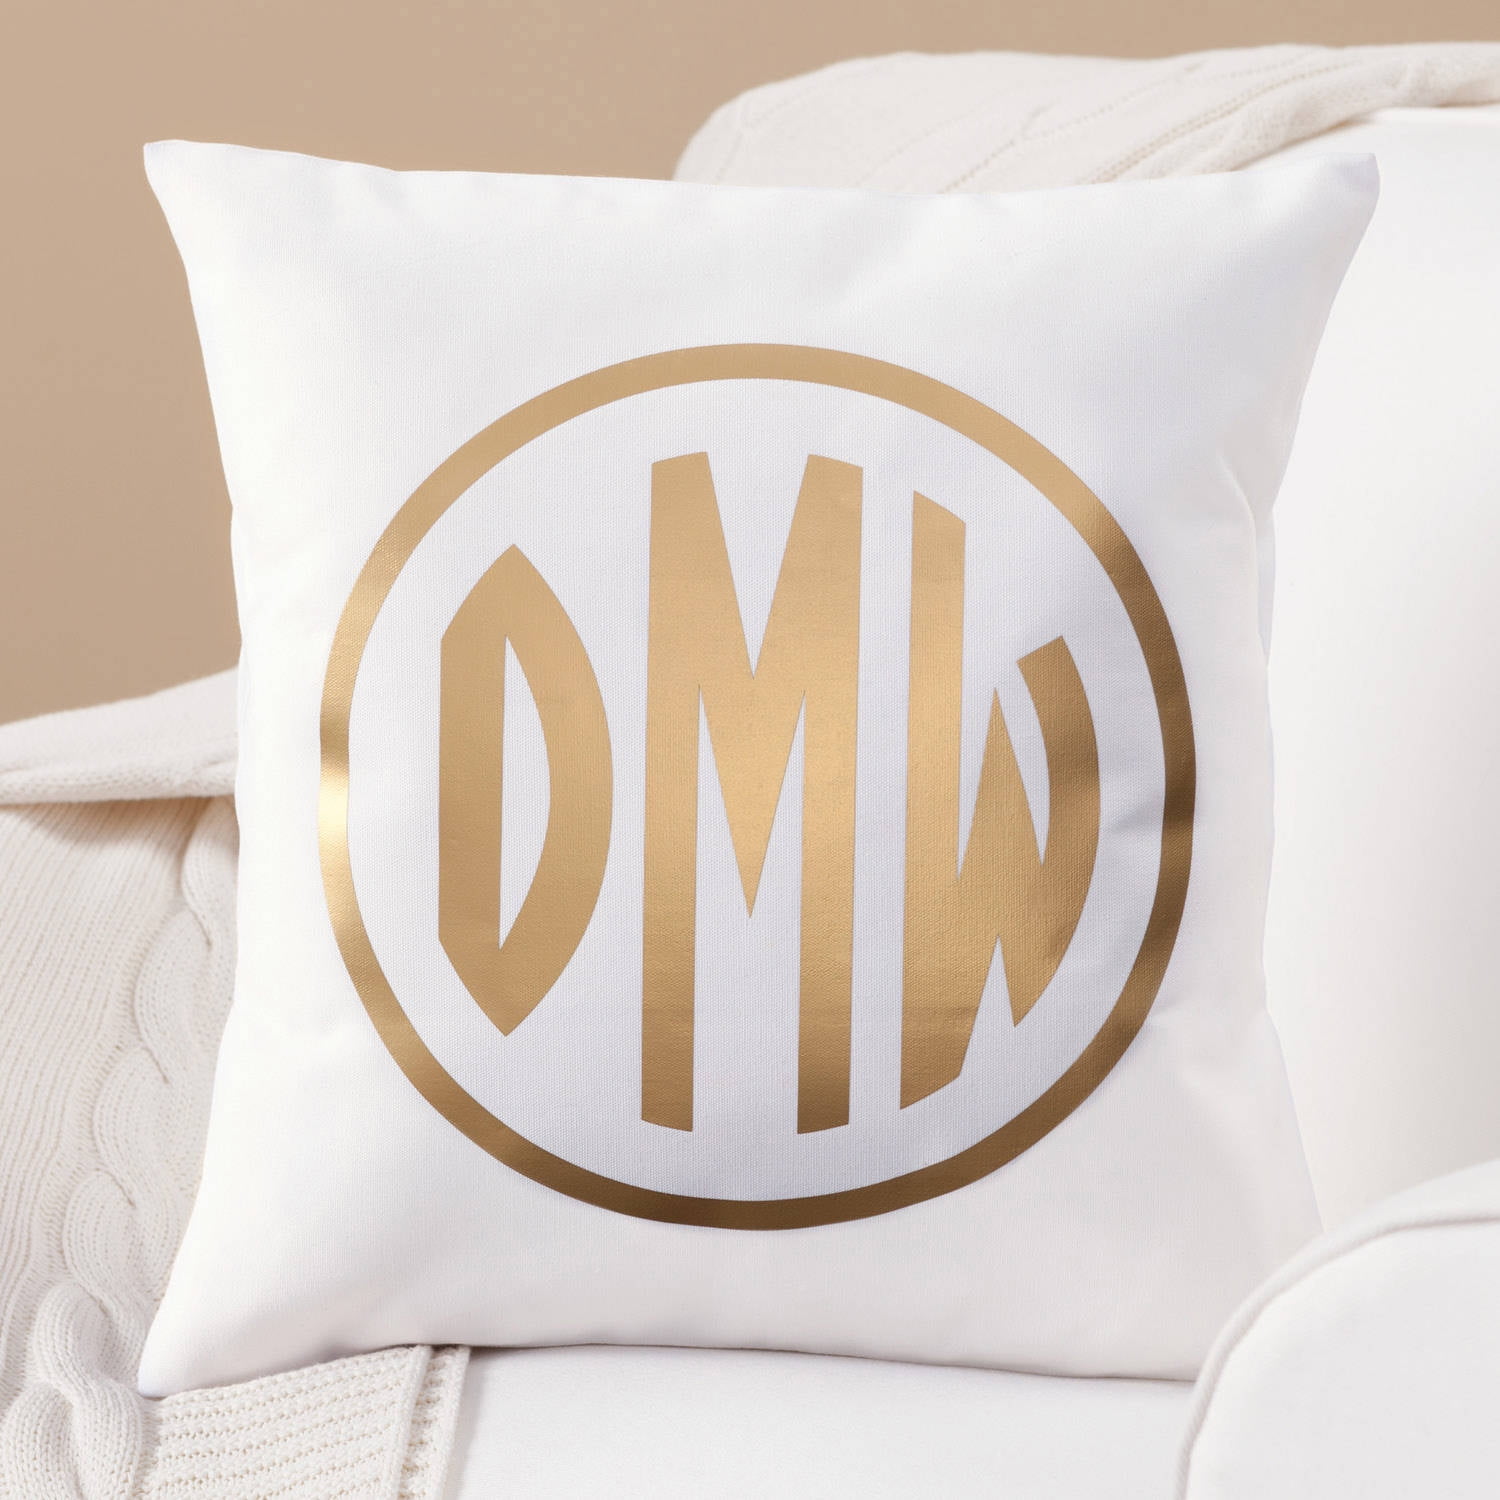 Personalized Monogram Pillow Cover in White, Monogram Lumbar